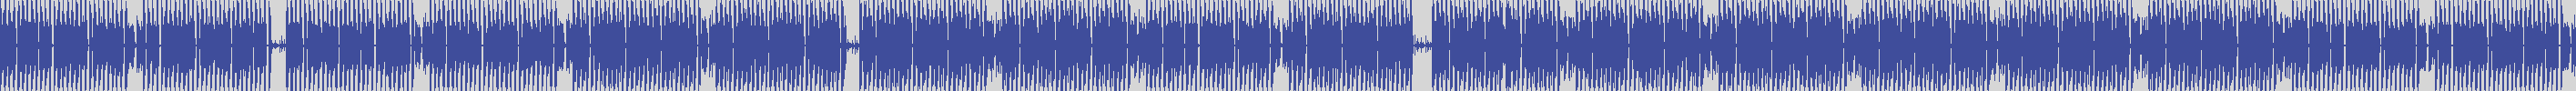 nf_boyz_records [NFY021] Sierra - Rekoom Theme [Funky Club Mix] audio wave form